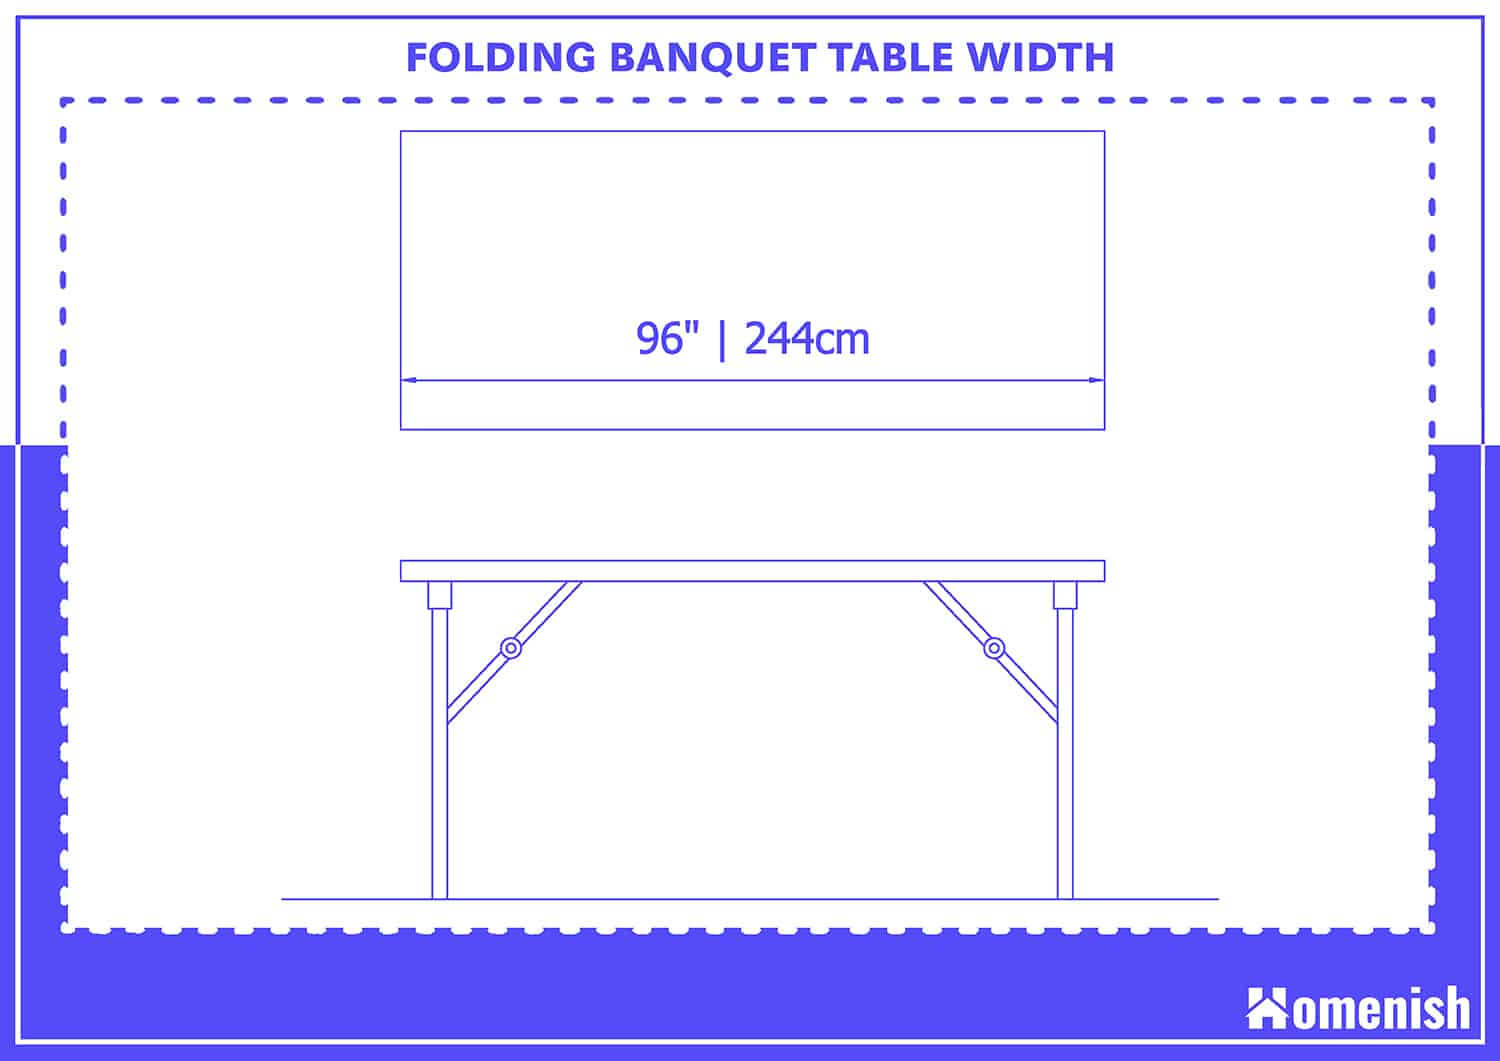 Folding Banquet Table Width